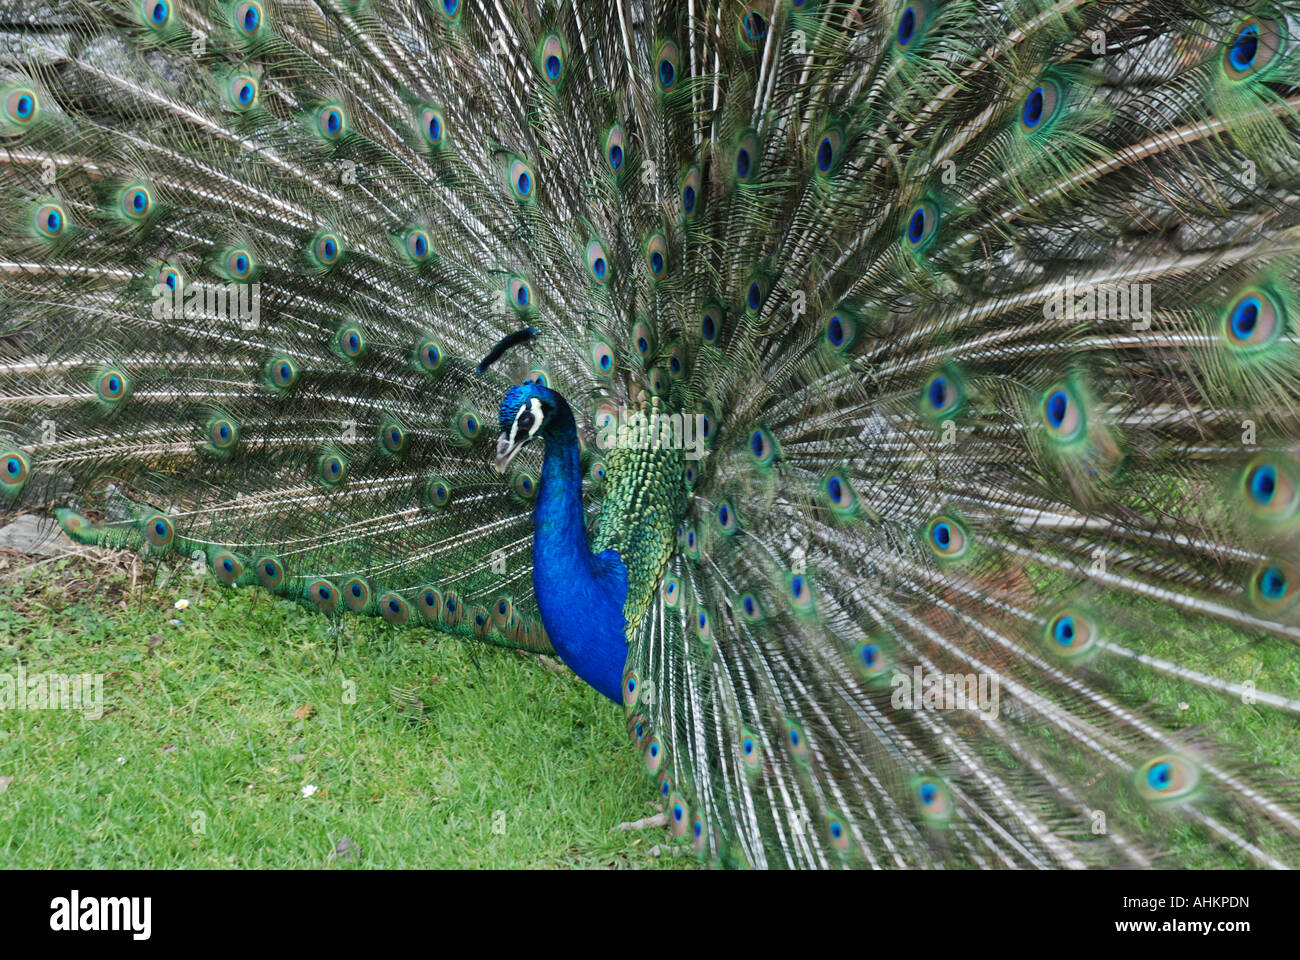 Peacock spreading feathers Stock Photo